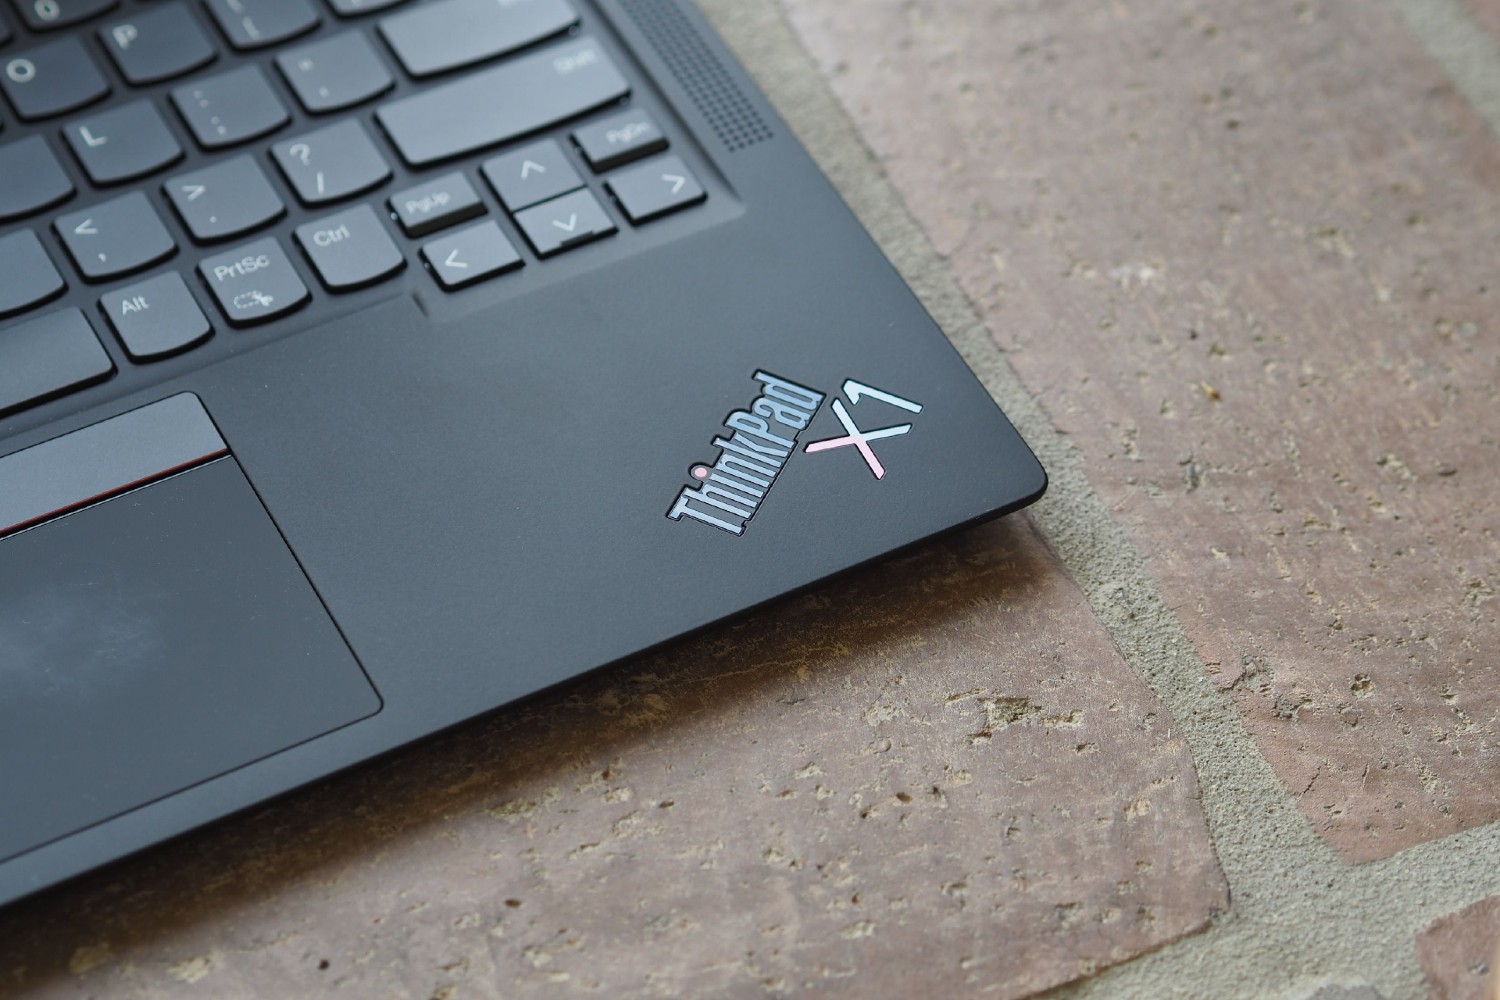 ThinkPad X1 Carbon Gen 9, Business Laptop